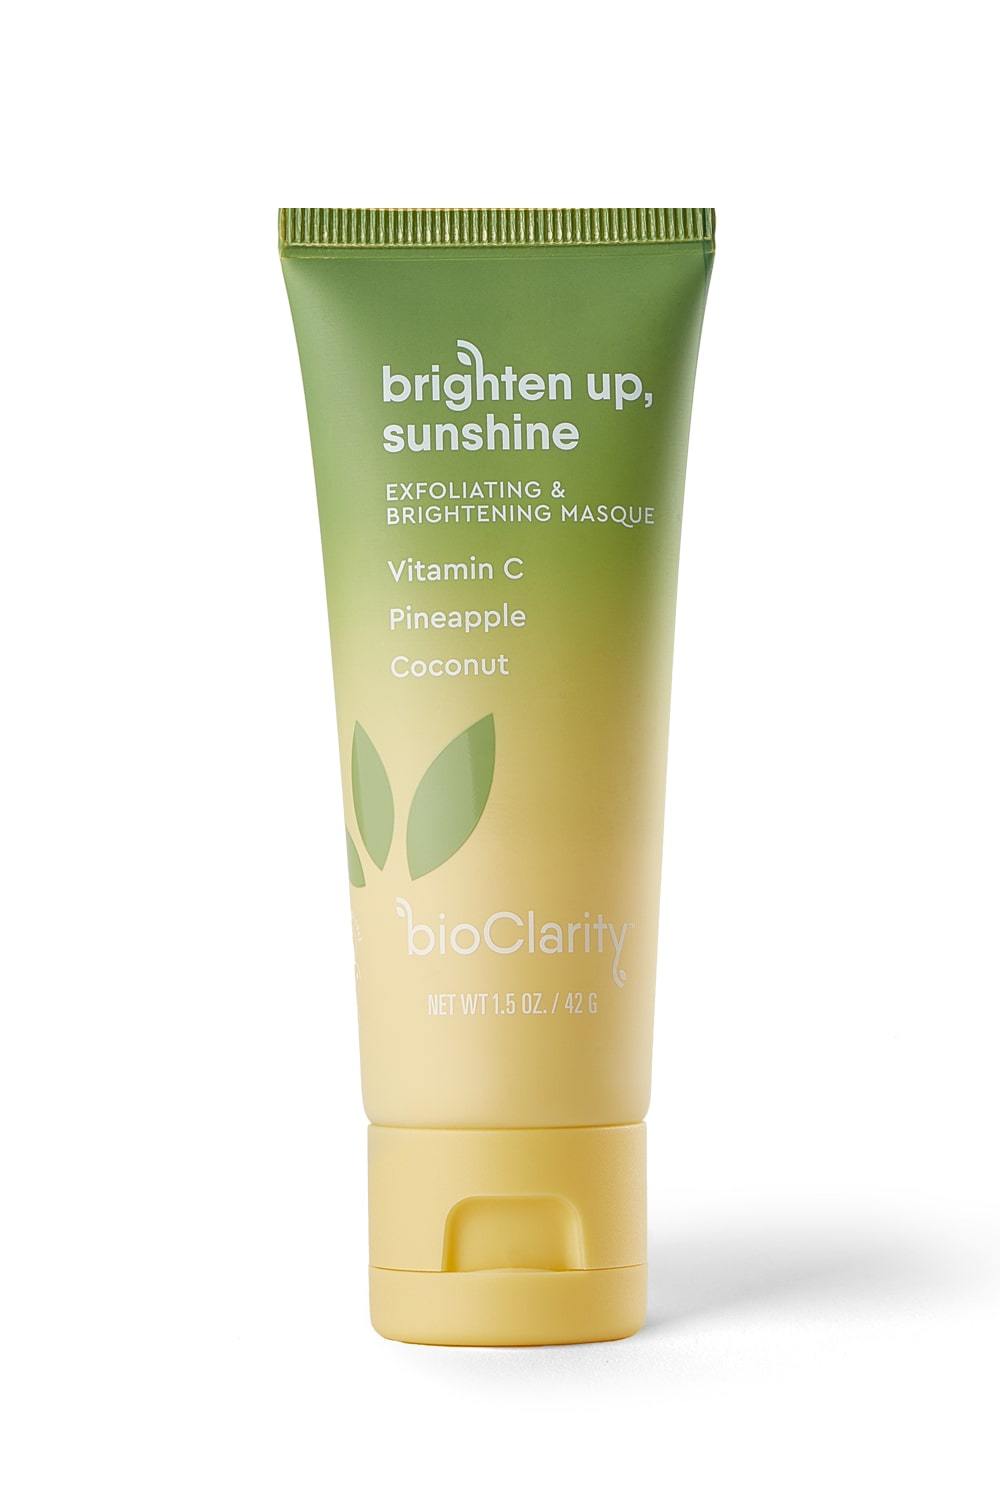 Shapermint bioClarity 35% Off - Brightening Masque Brighten Up, Sunshine by bioClarity